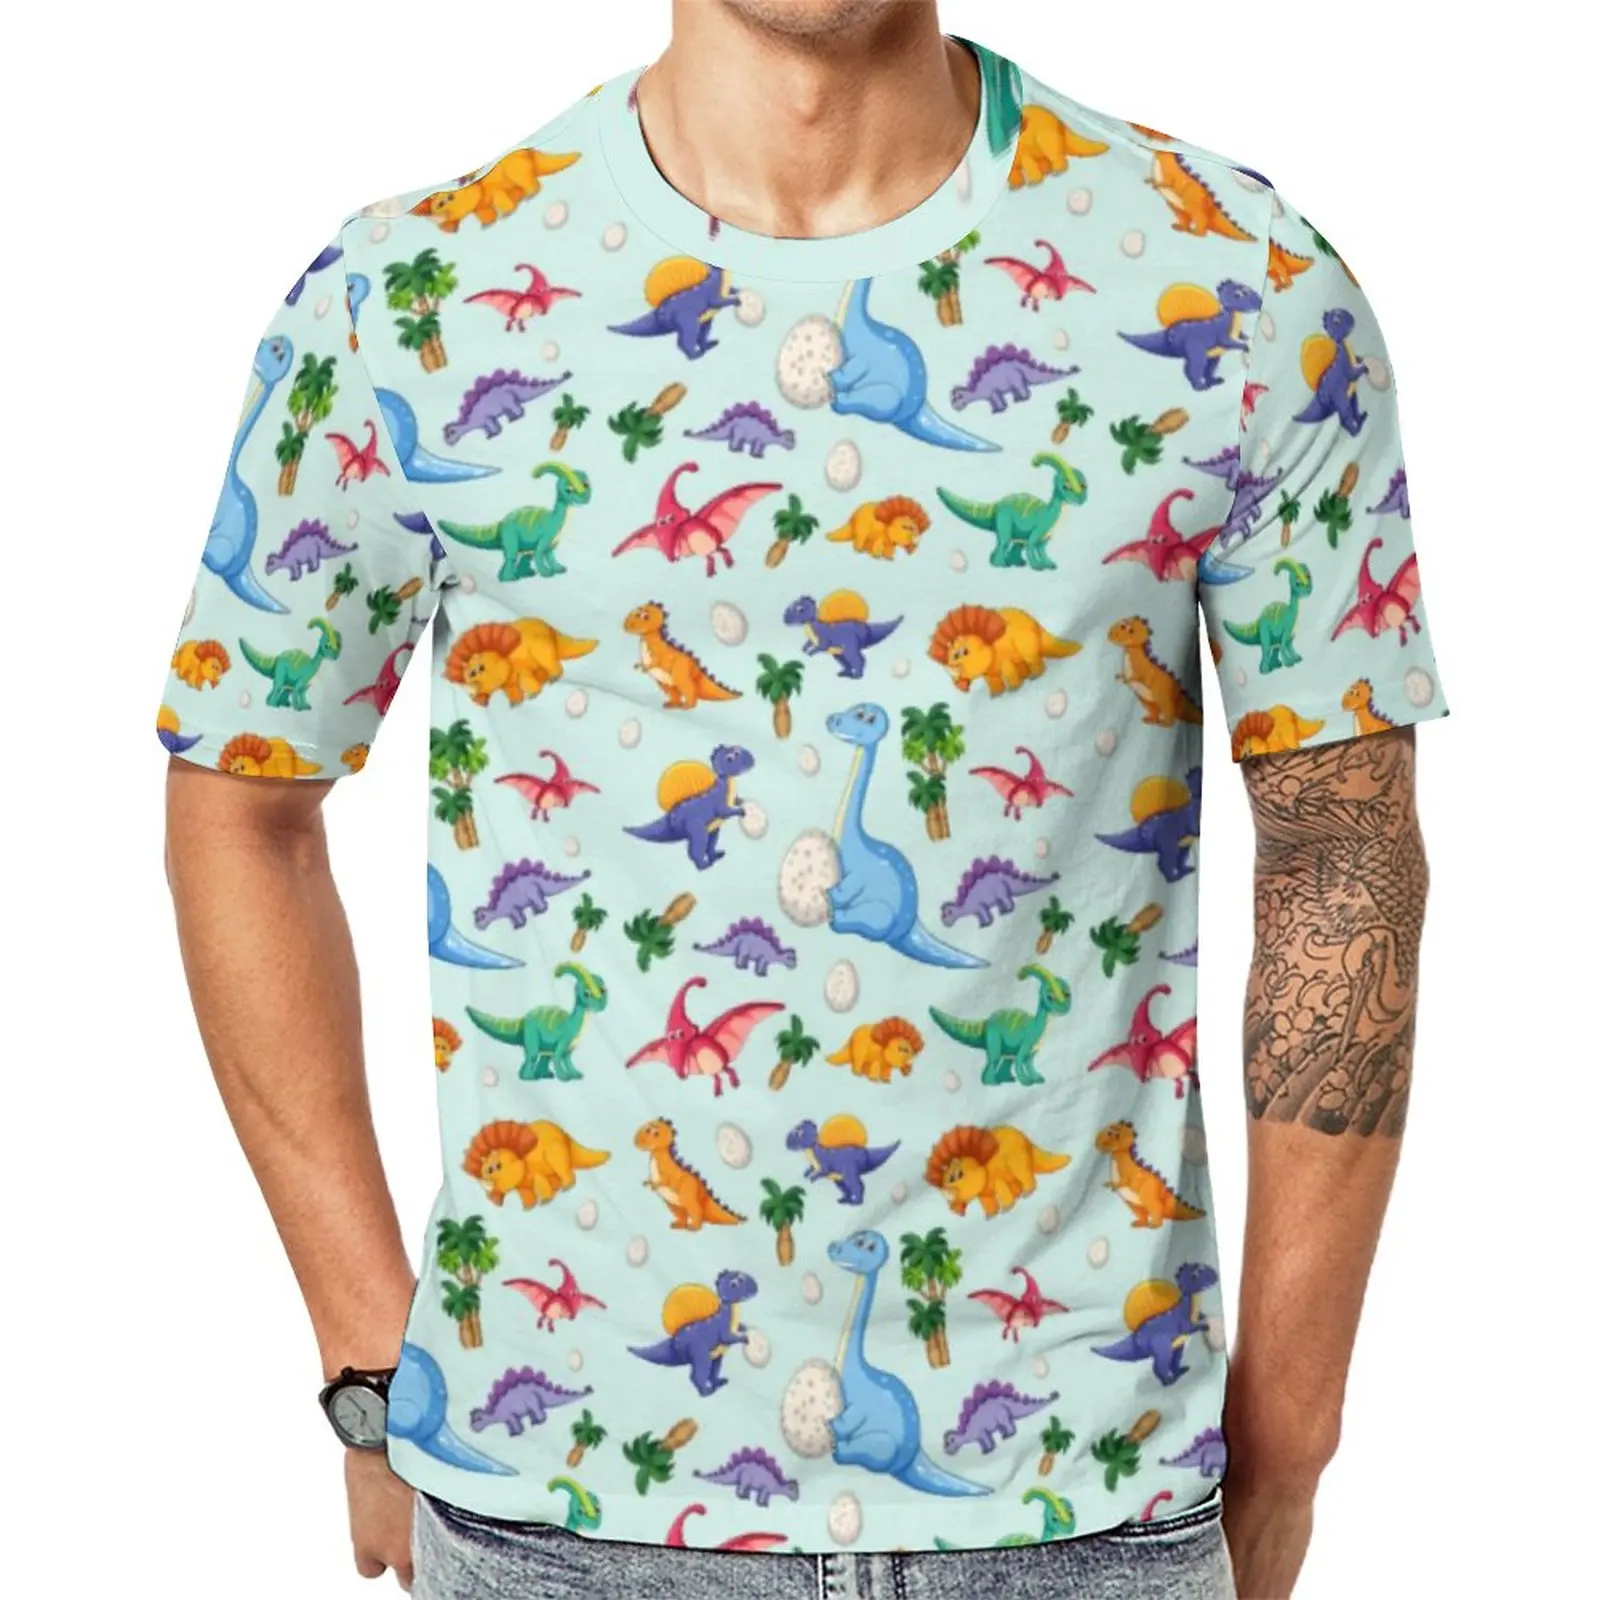 

Colorful Cute Dinosaurs T-Shirt Jungle Animal Print Hip Hop T-Shirts Short-Sleeve Design Tops Cheap Premium EMO Plus Size Tees